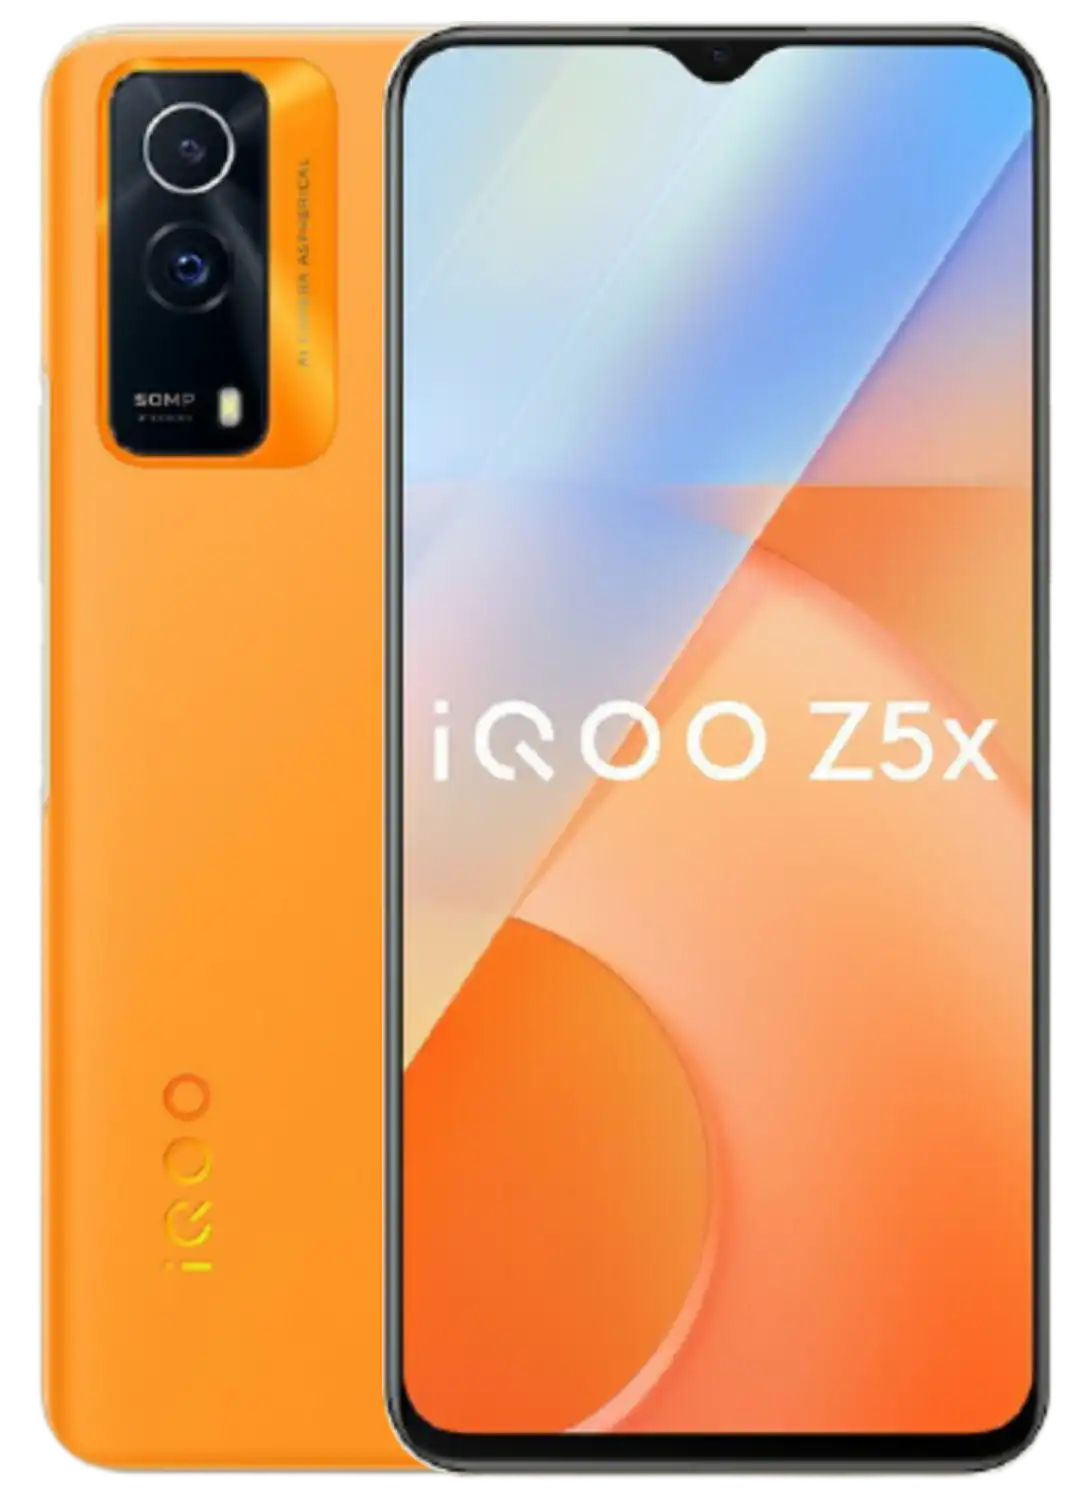 iQOO Z5x 5G – Full Specifications